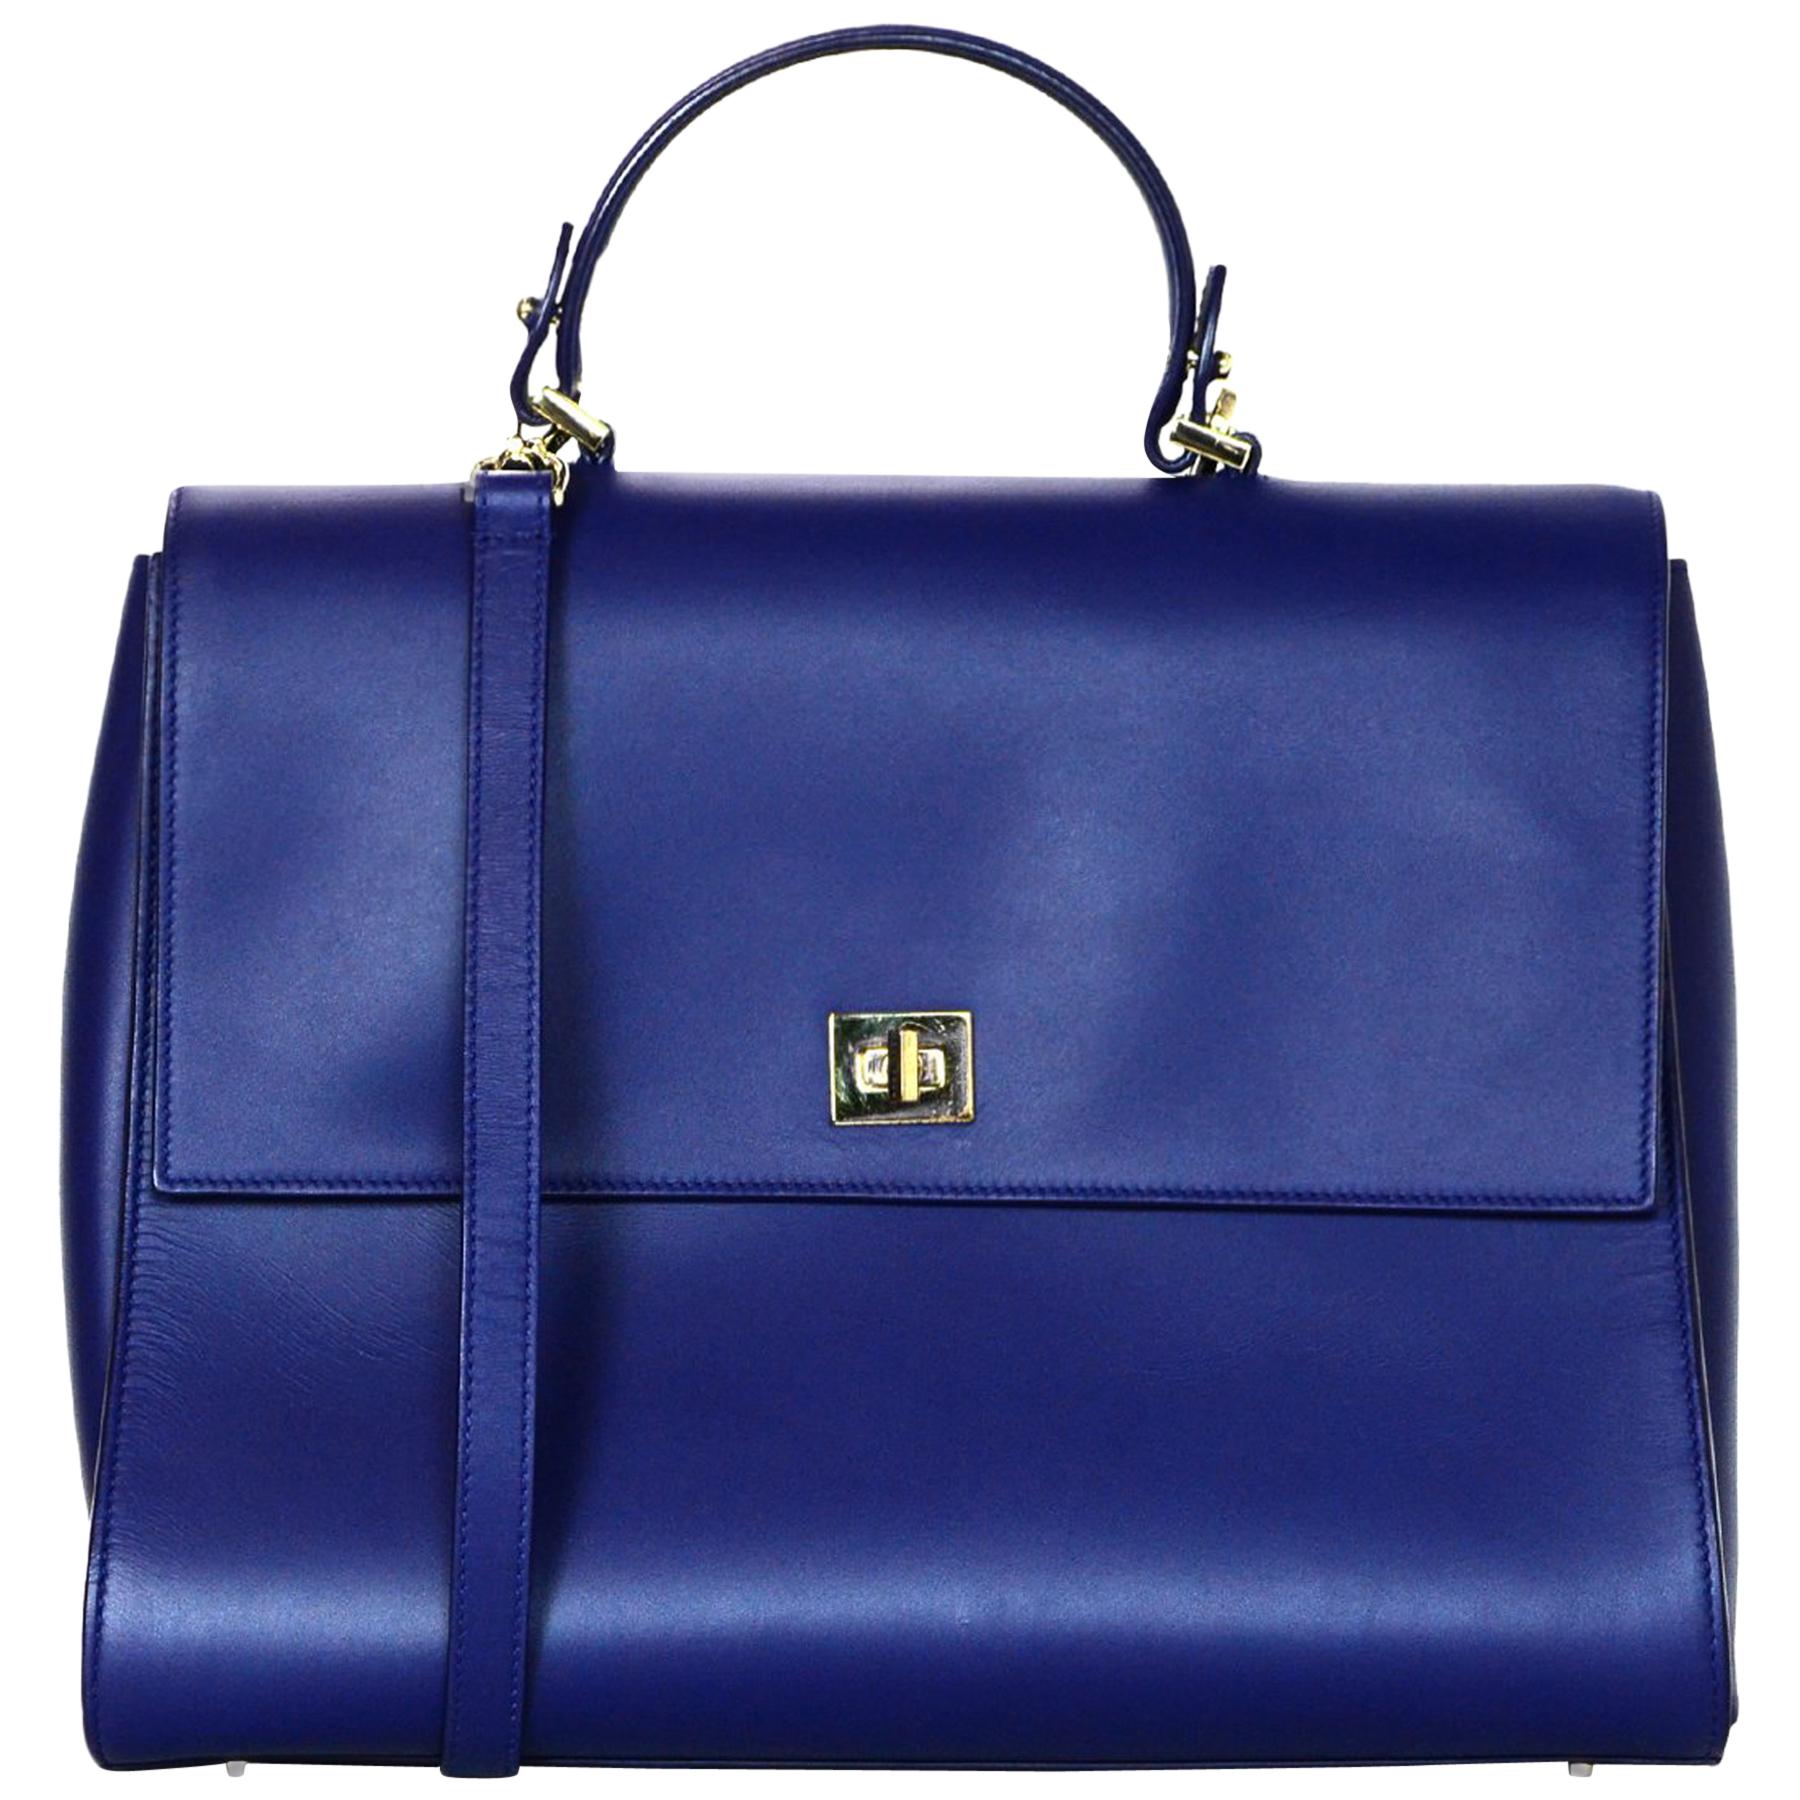 Hugo Boss Blue Leather Bespoke S Top Handle Satchel Bag